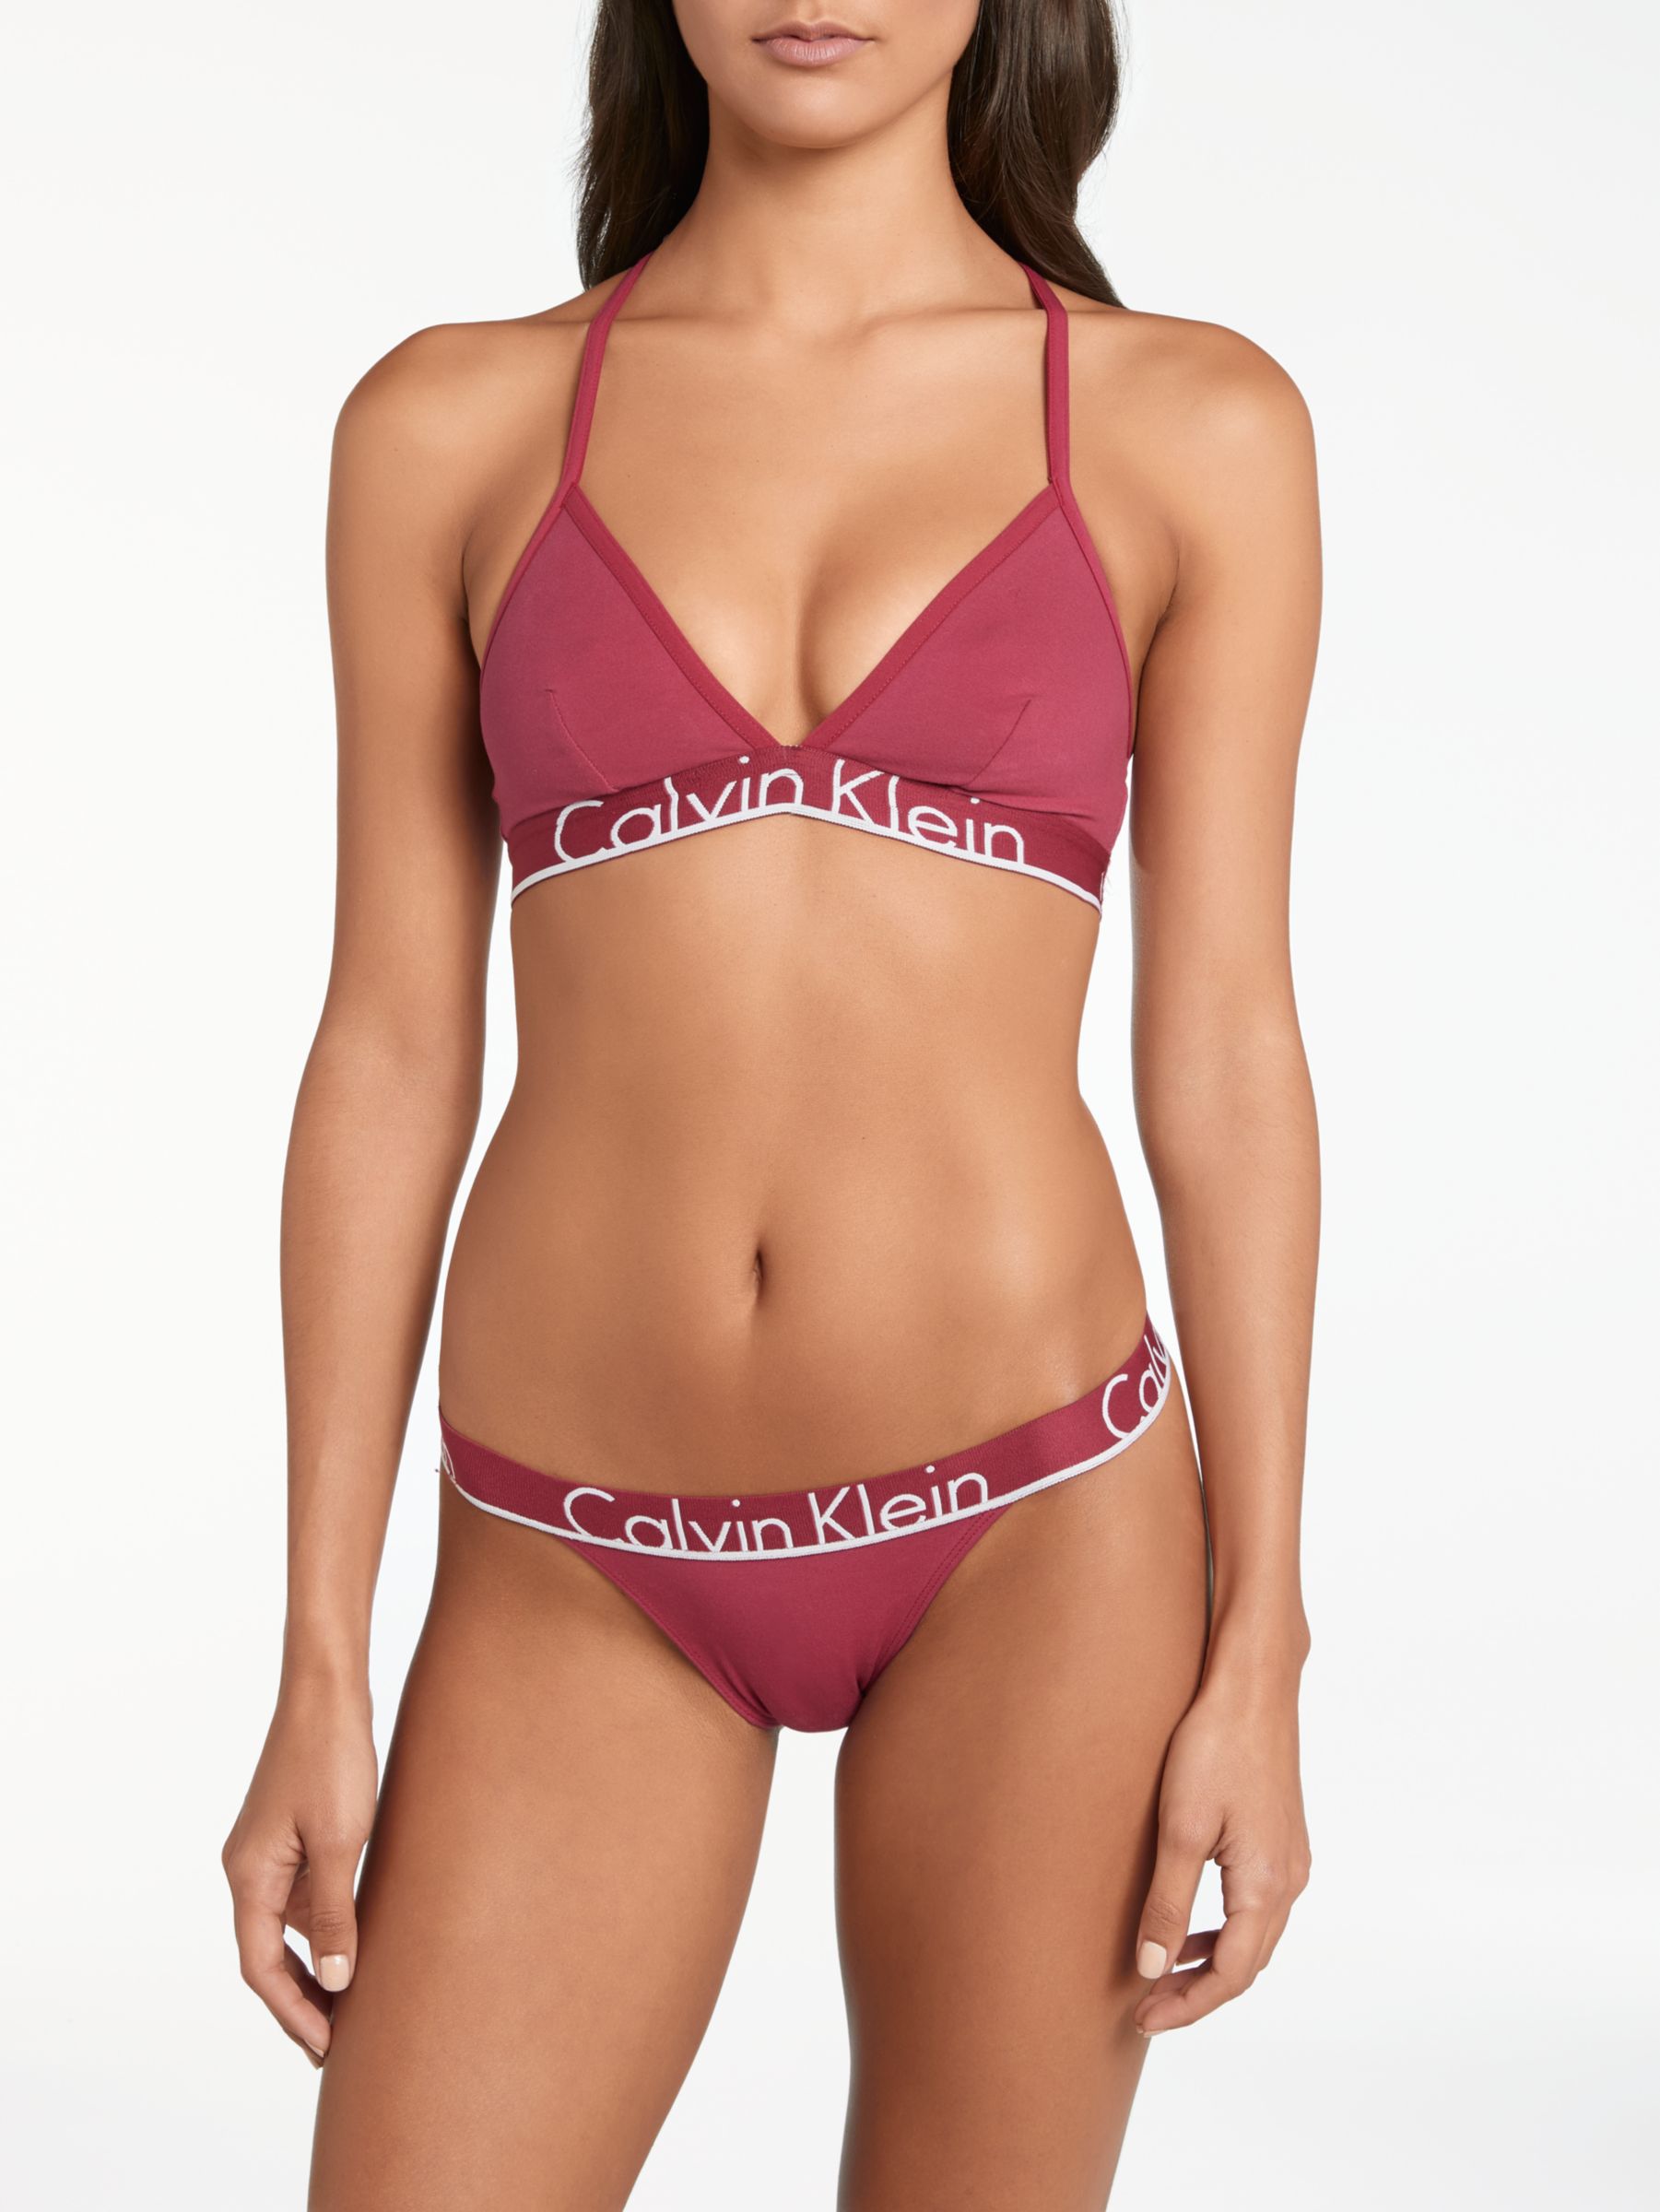 calvin klein bikini underwear set